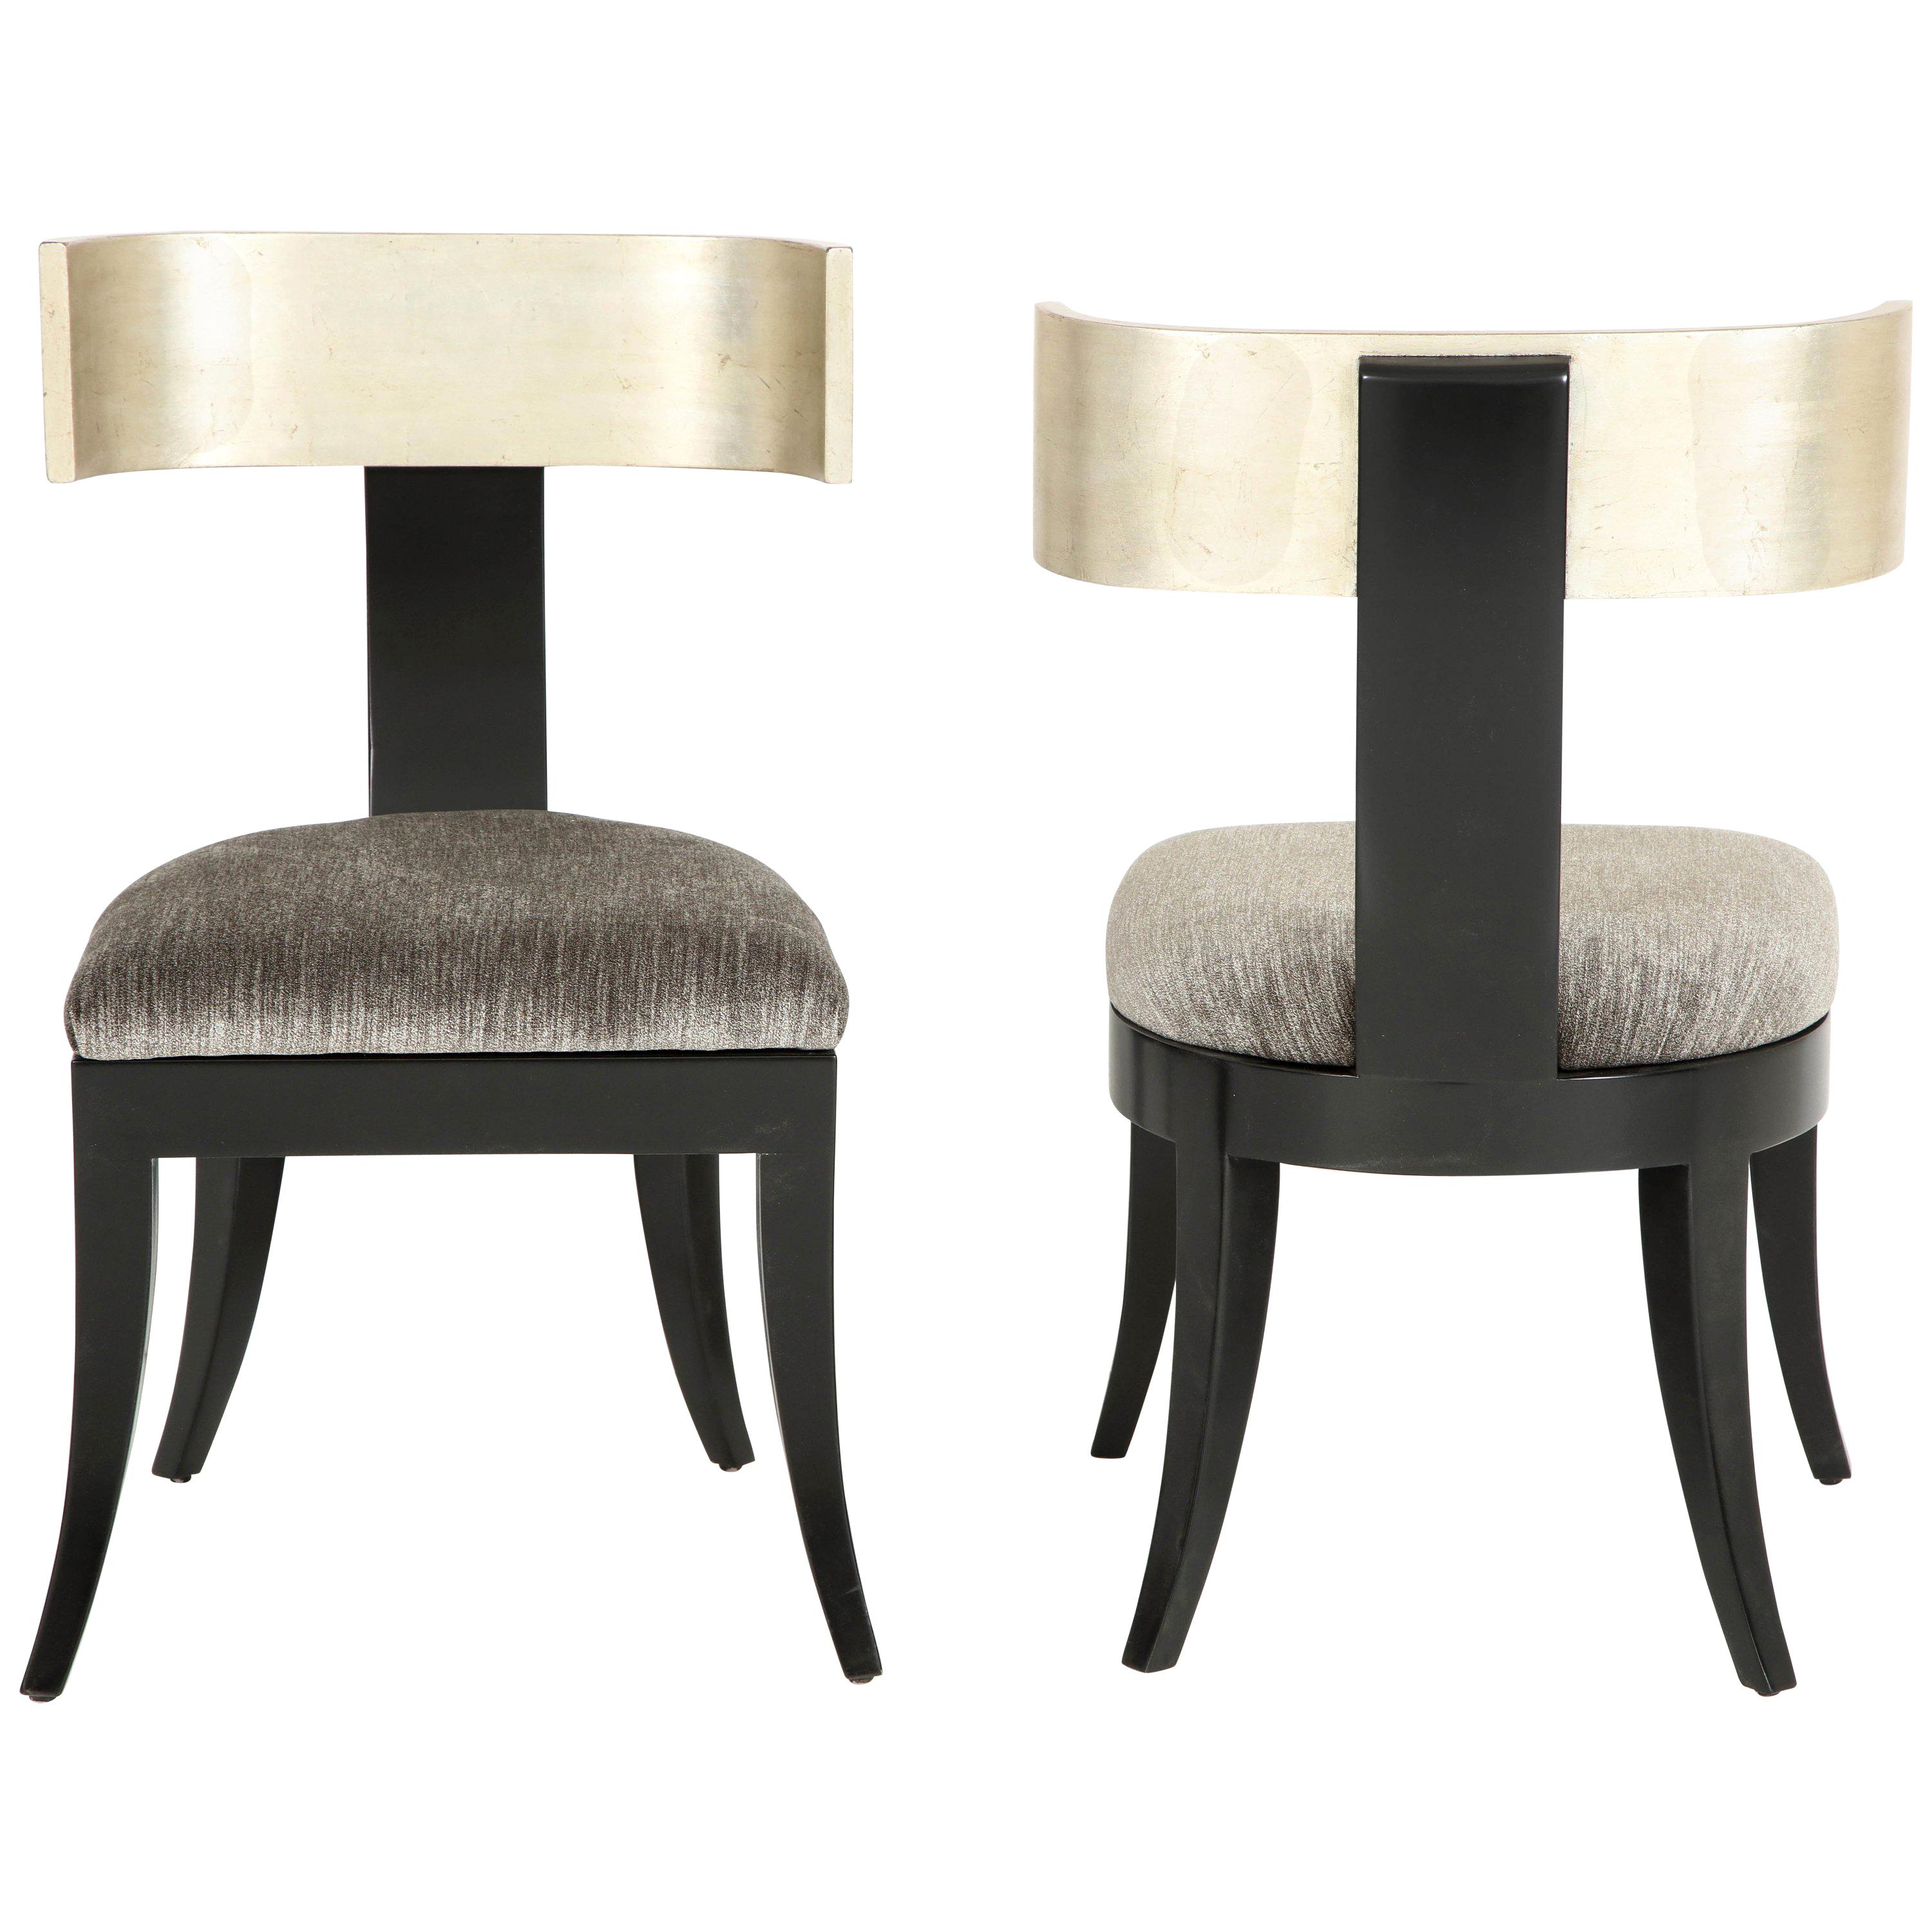 Pair of Klismos Chairs by J Robert Scott